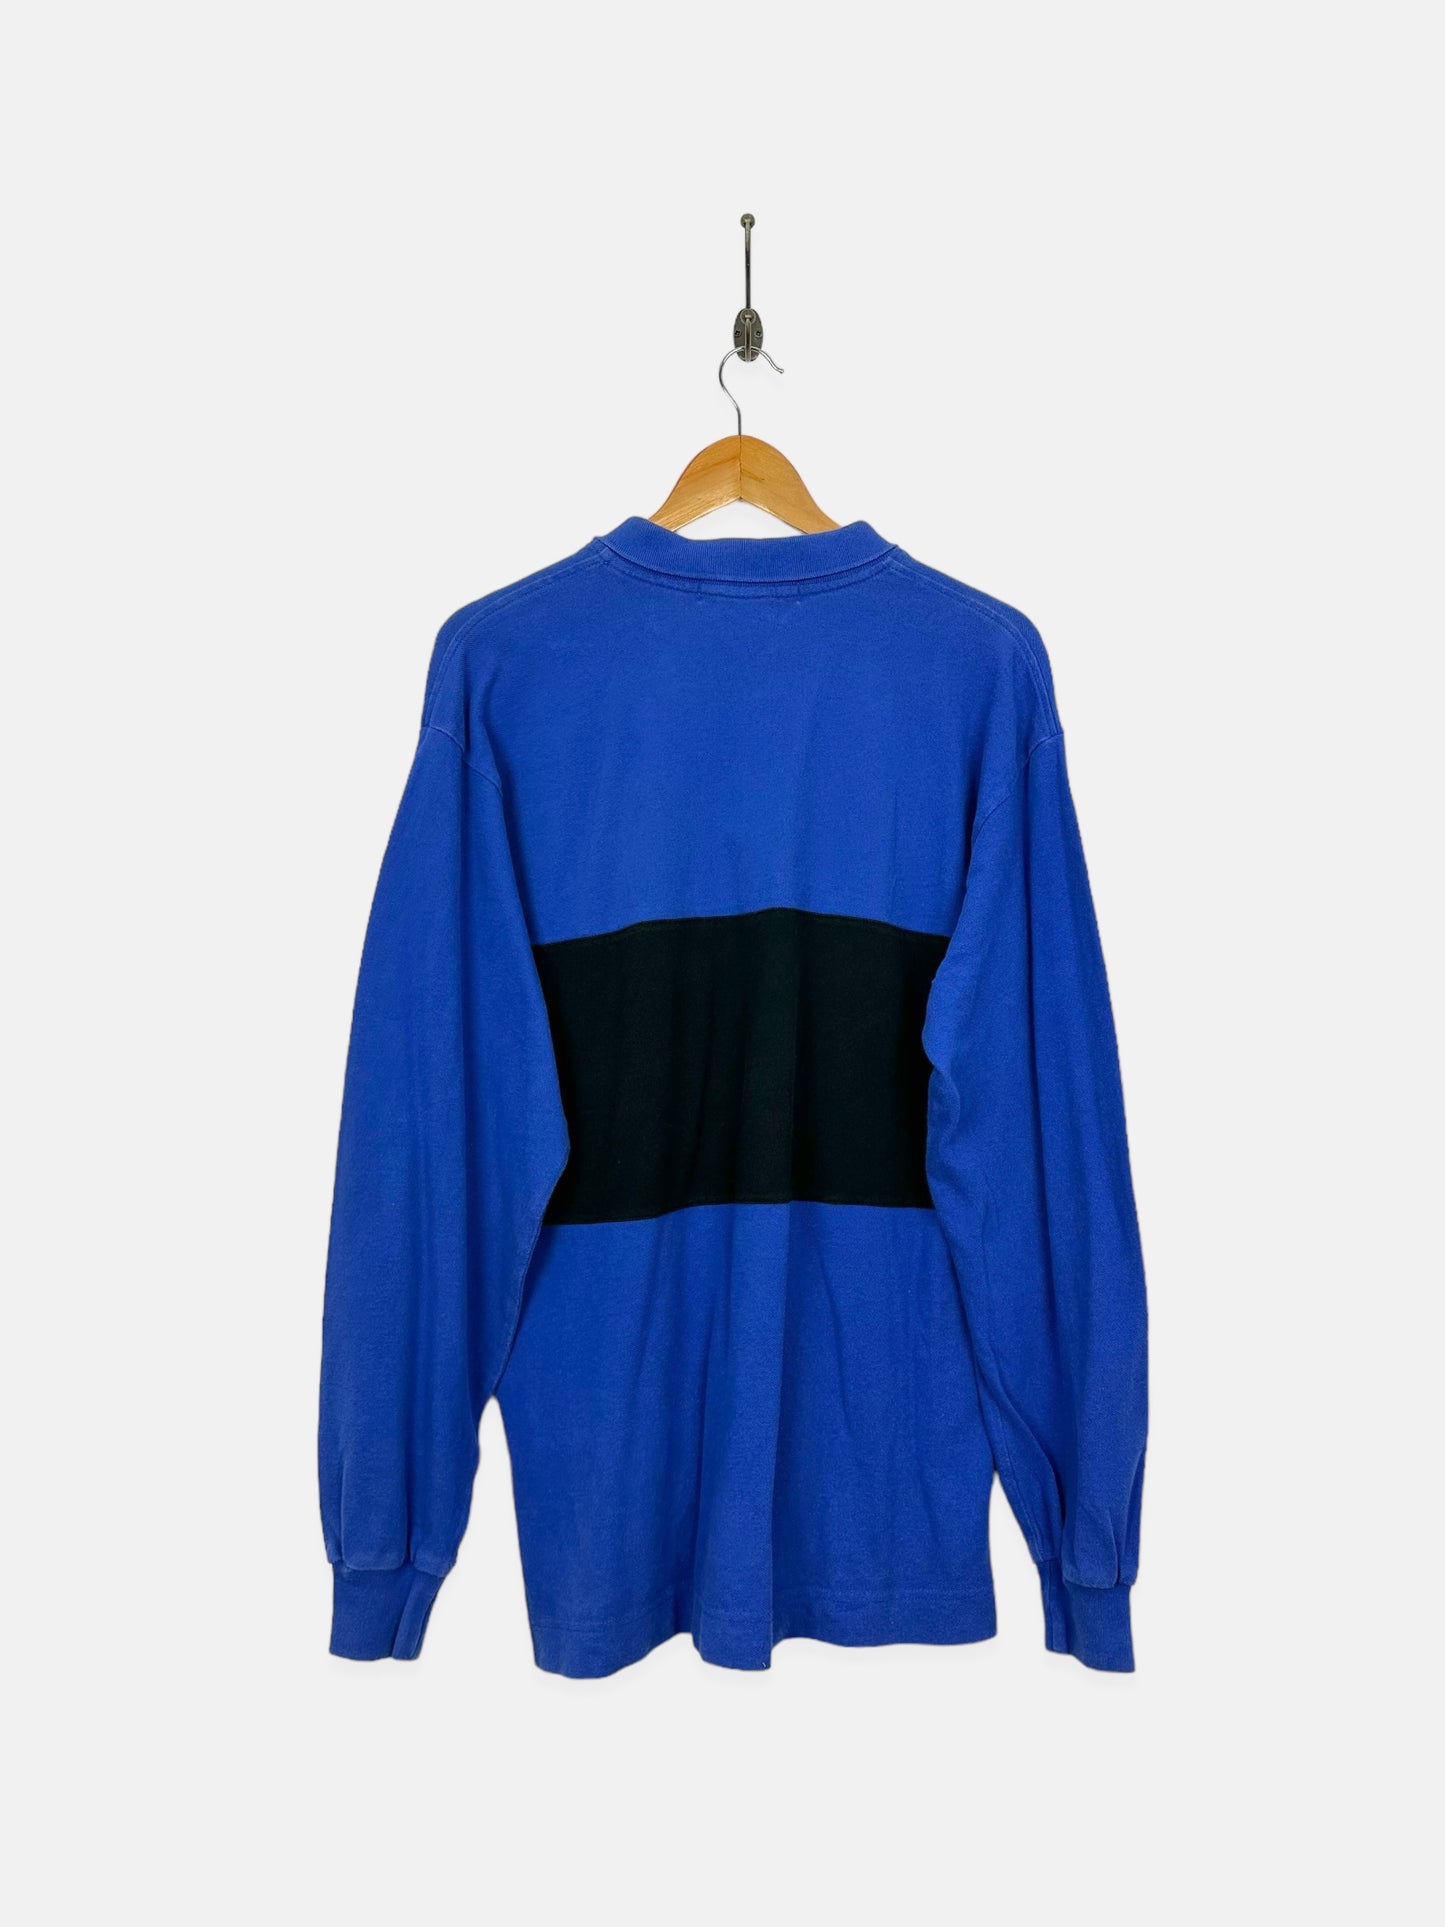 90's Nautica Competition Embroidered Vintage Quarterzip Light Sweatshirt Size M